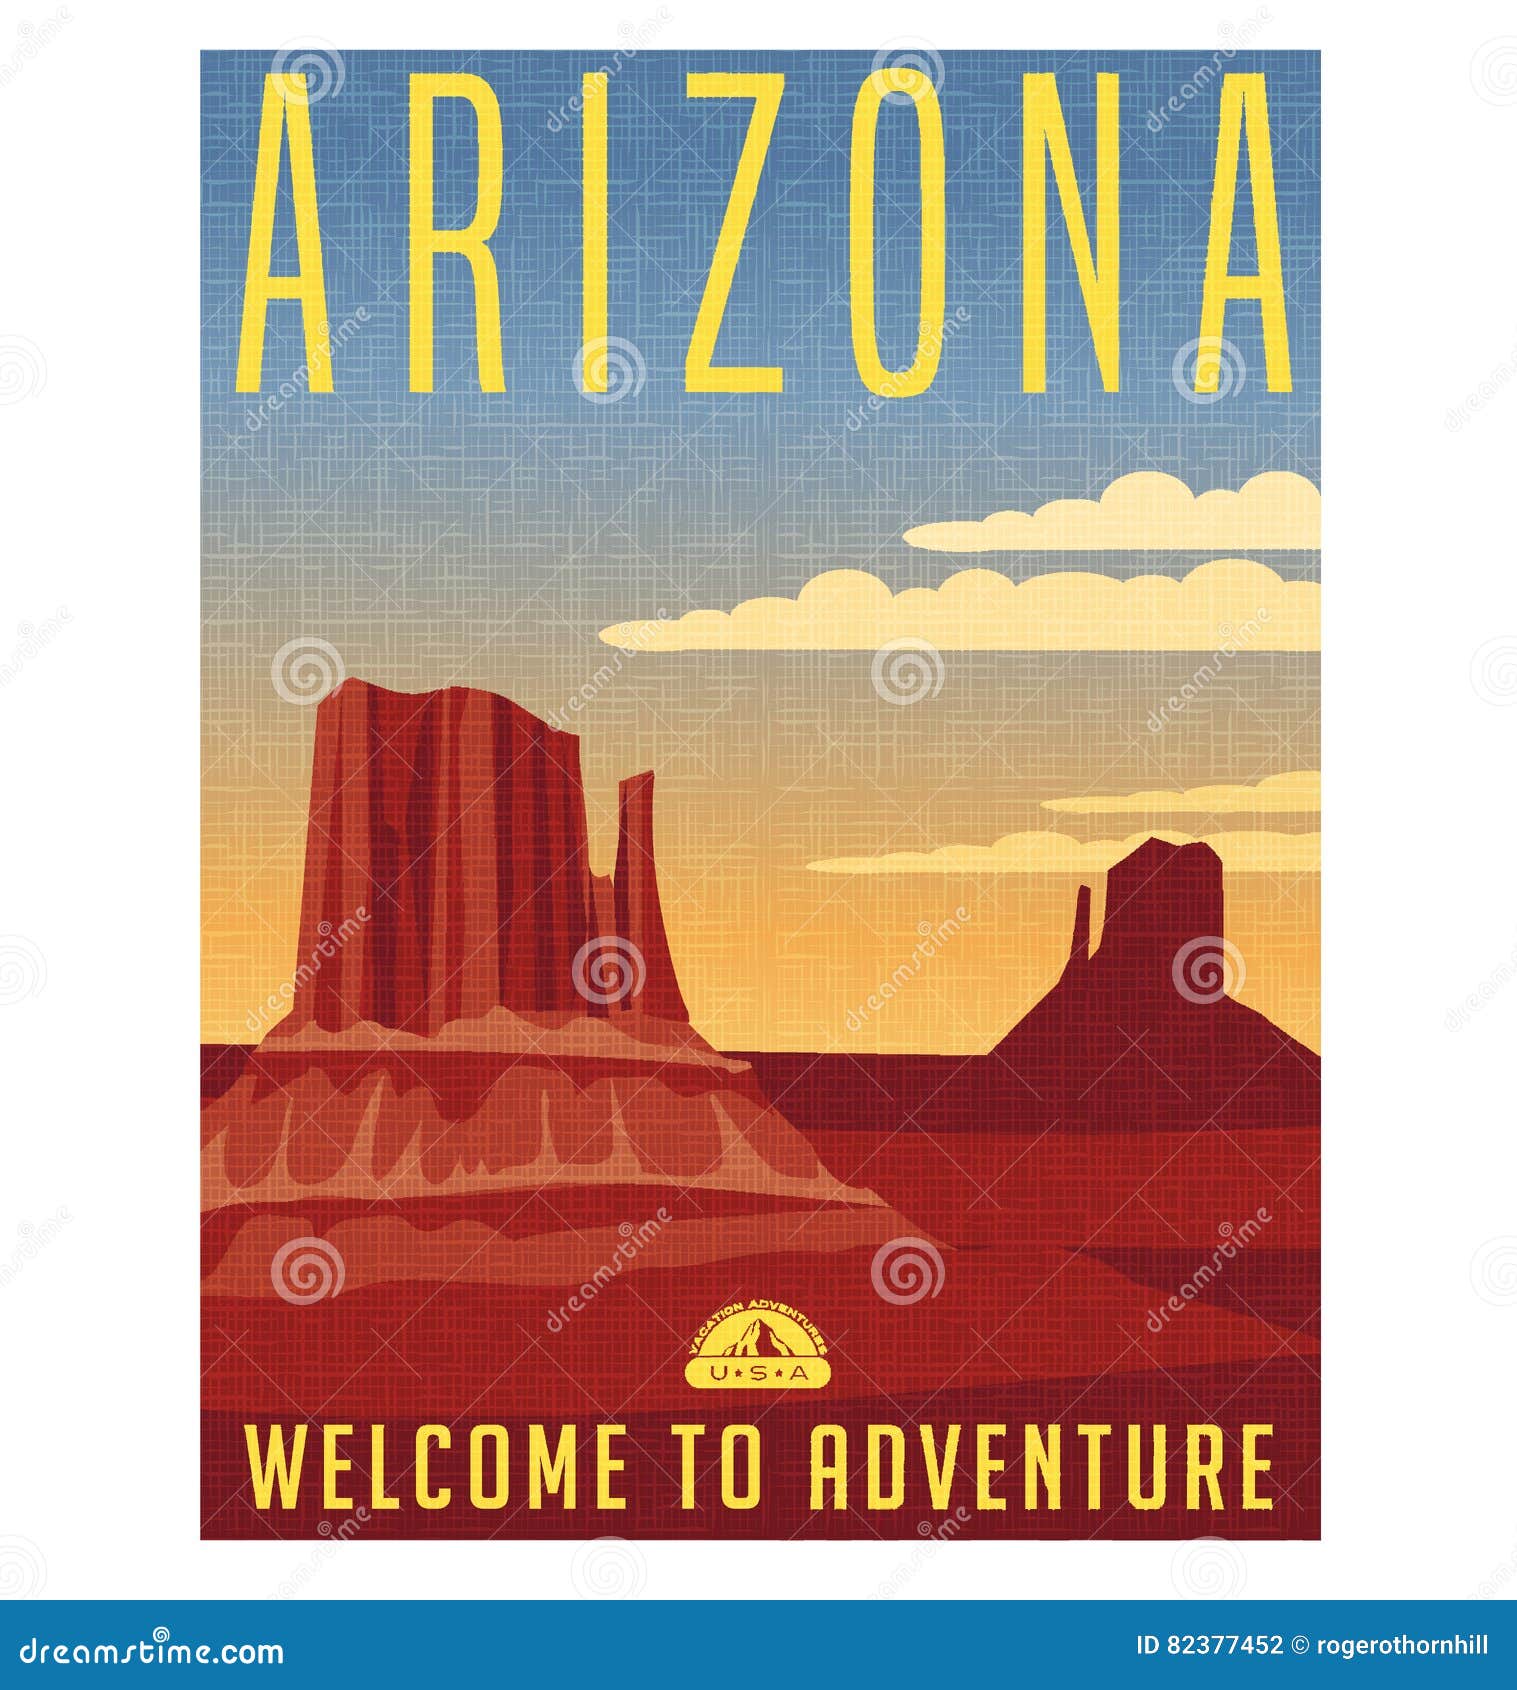 arizona united states retro travel poster